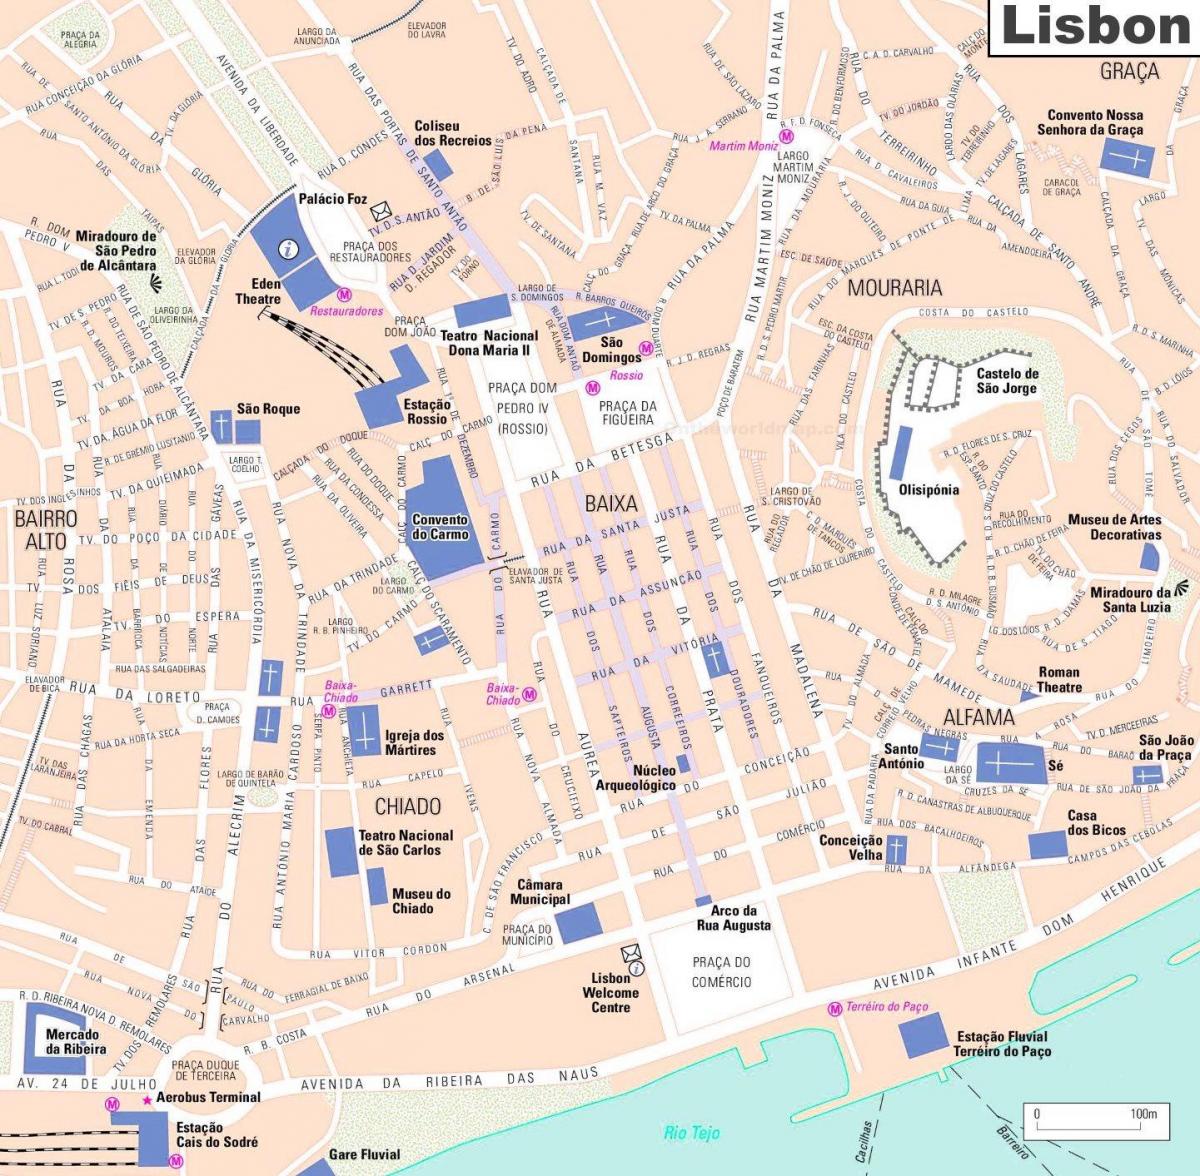 map of lisbon portugal city centre